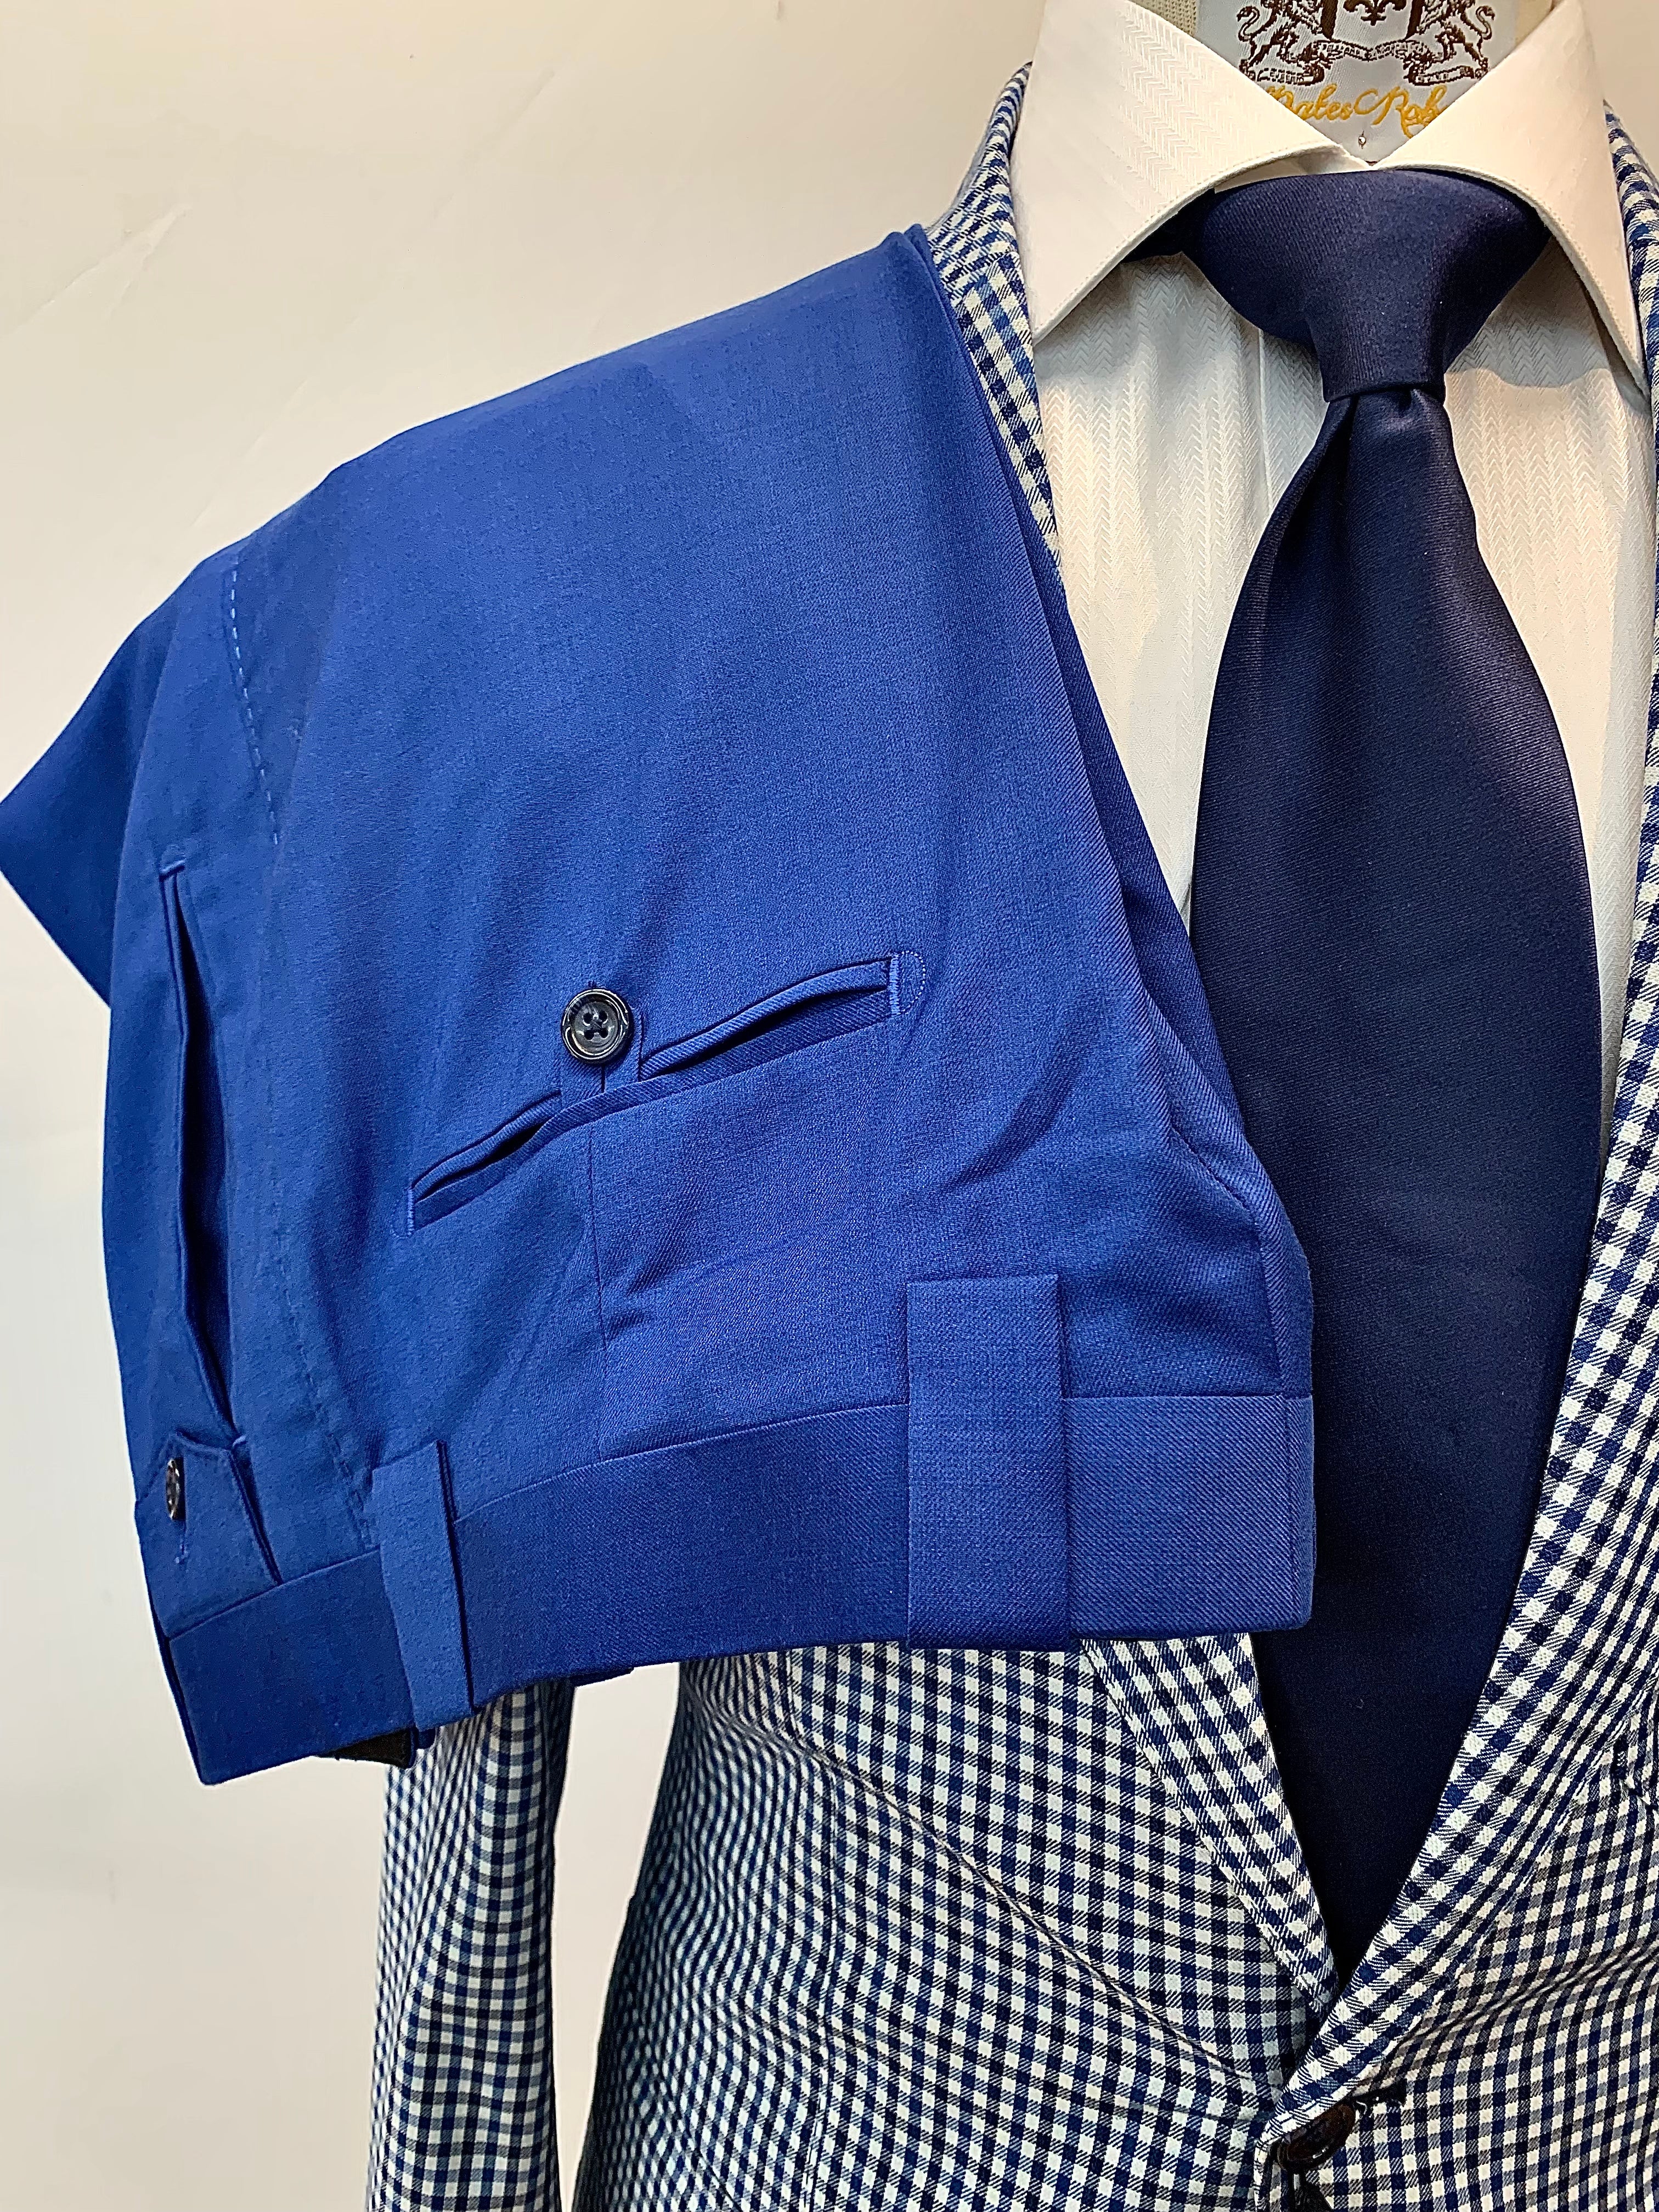 Stitch by Stitch Navy Plaid with w/Blue Flat Front Pant Blue Suit